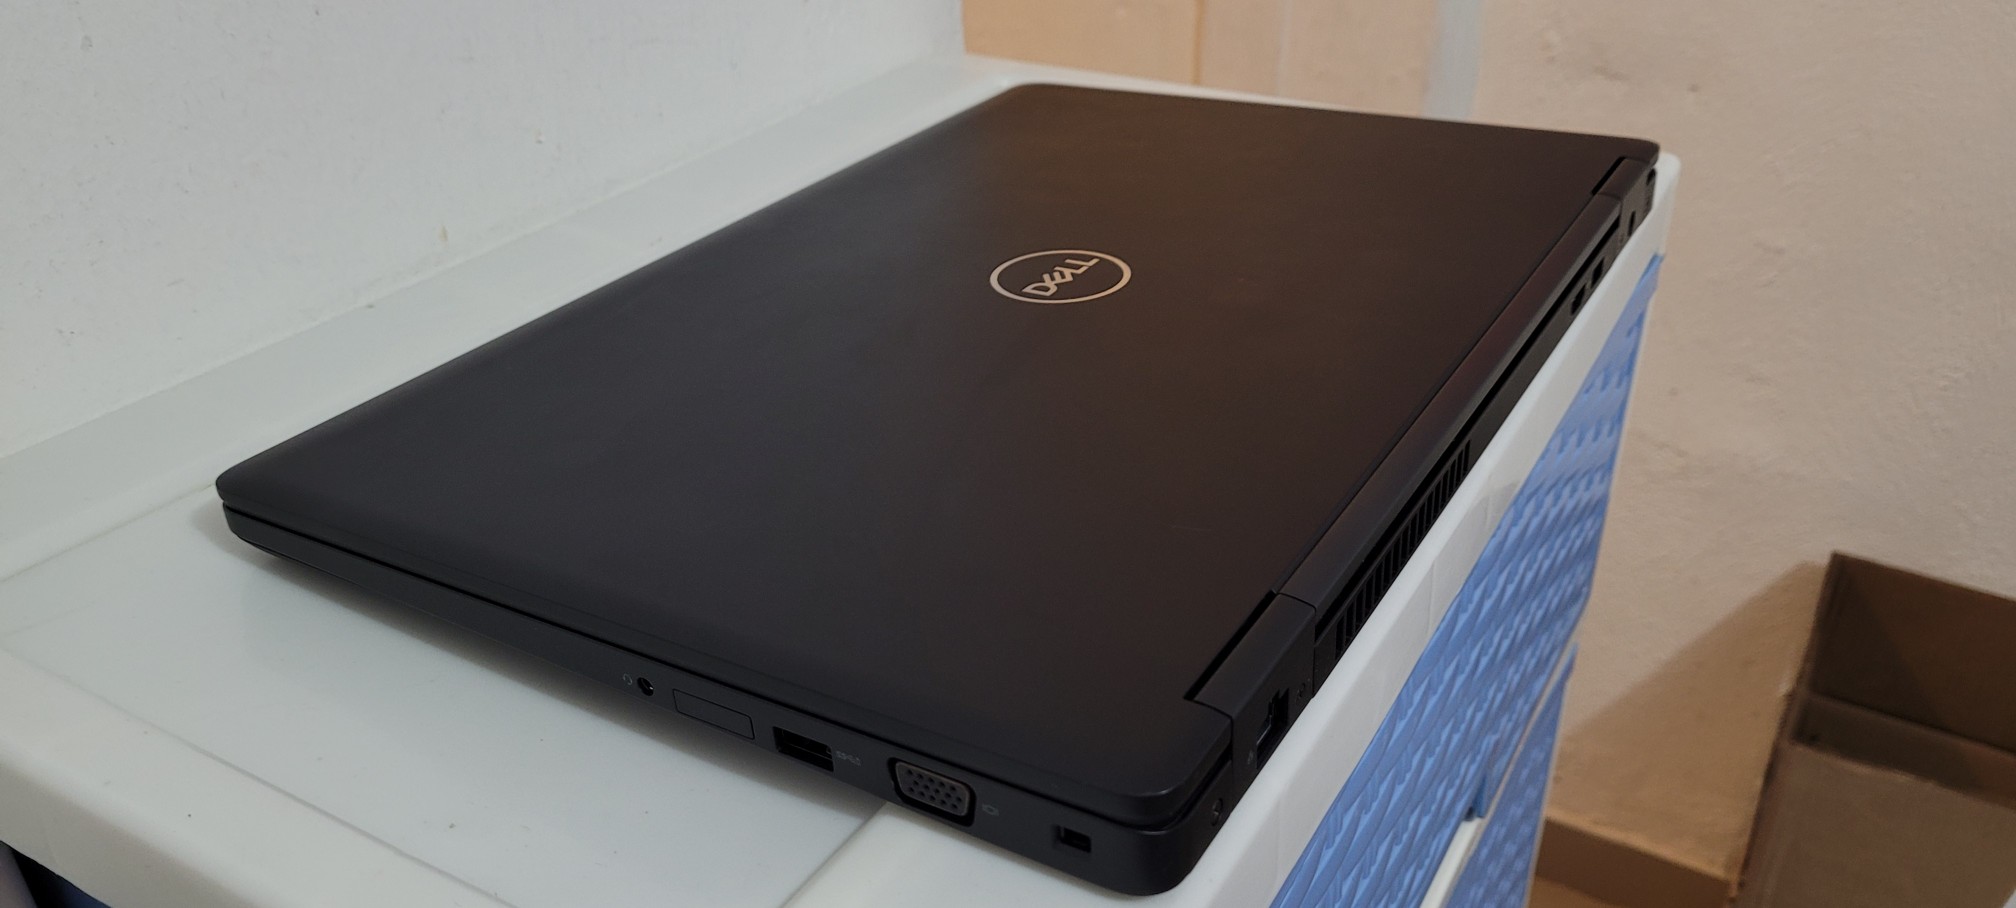 computadoras y laptops - Laptop Dell 5590 17 Pulg Core i5 8va Gen Ram 16gb Disco 512gb Video 8gb 2